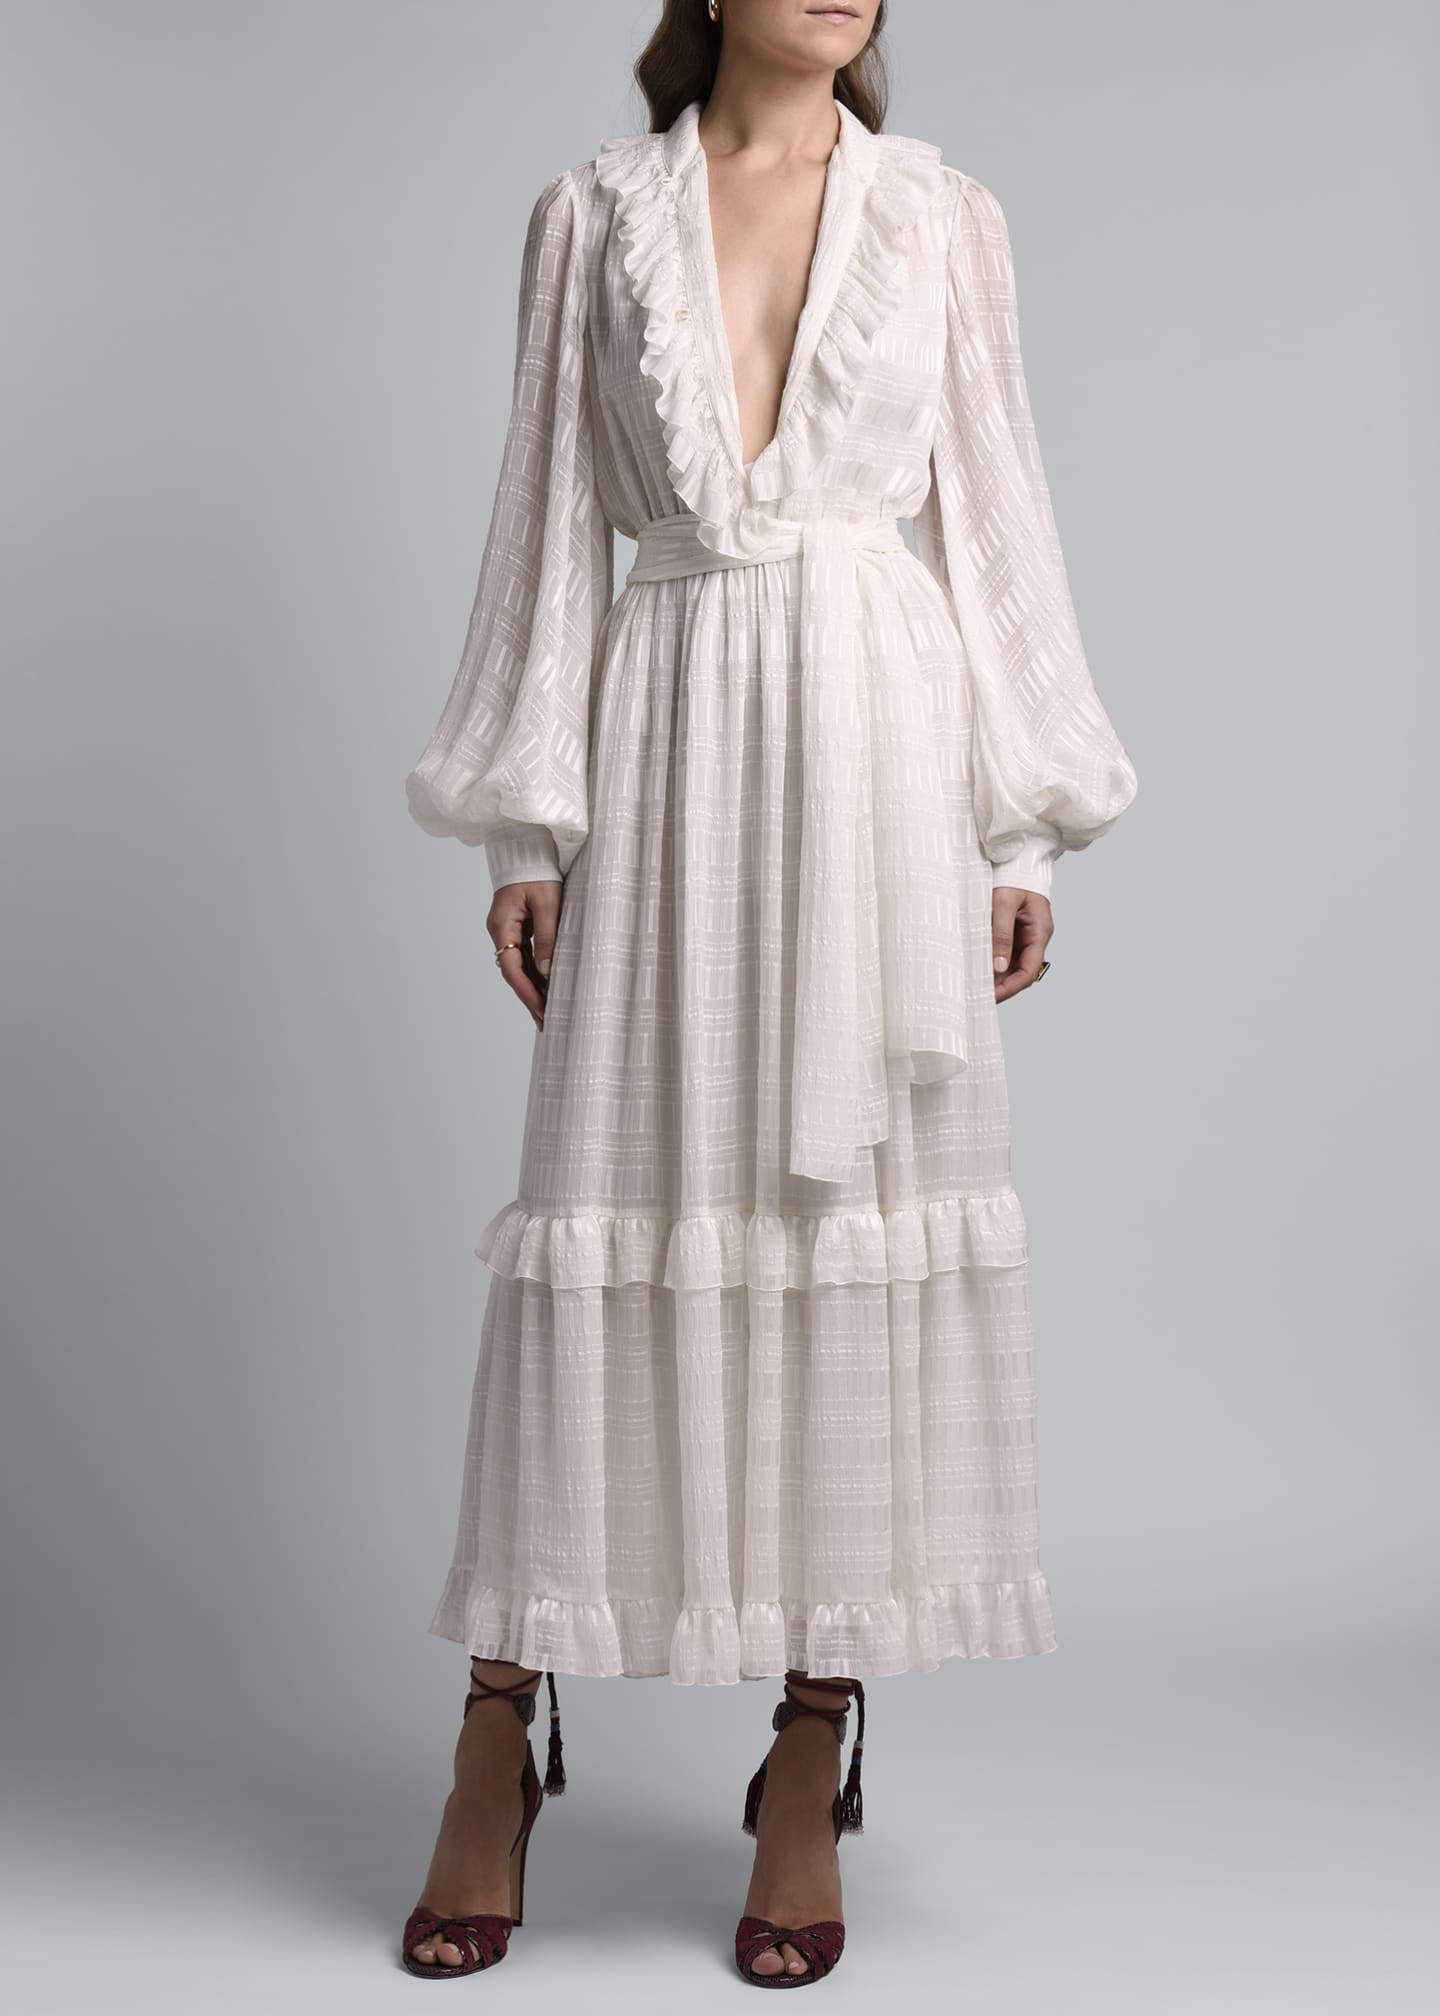 Etro Ruffled Silk Dress - Bergdorf Goodman